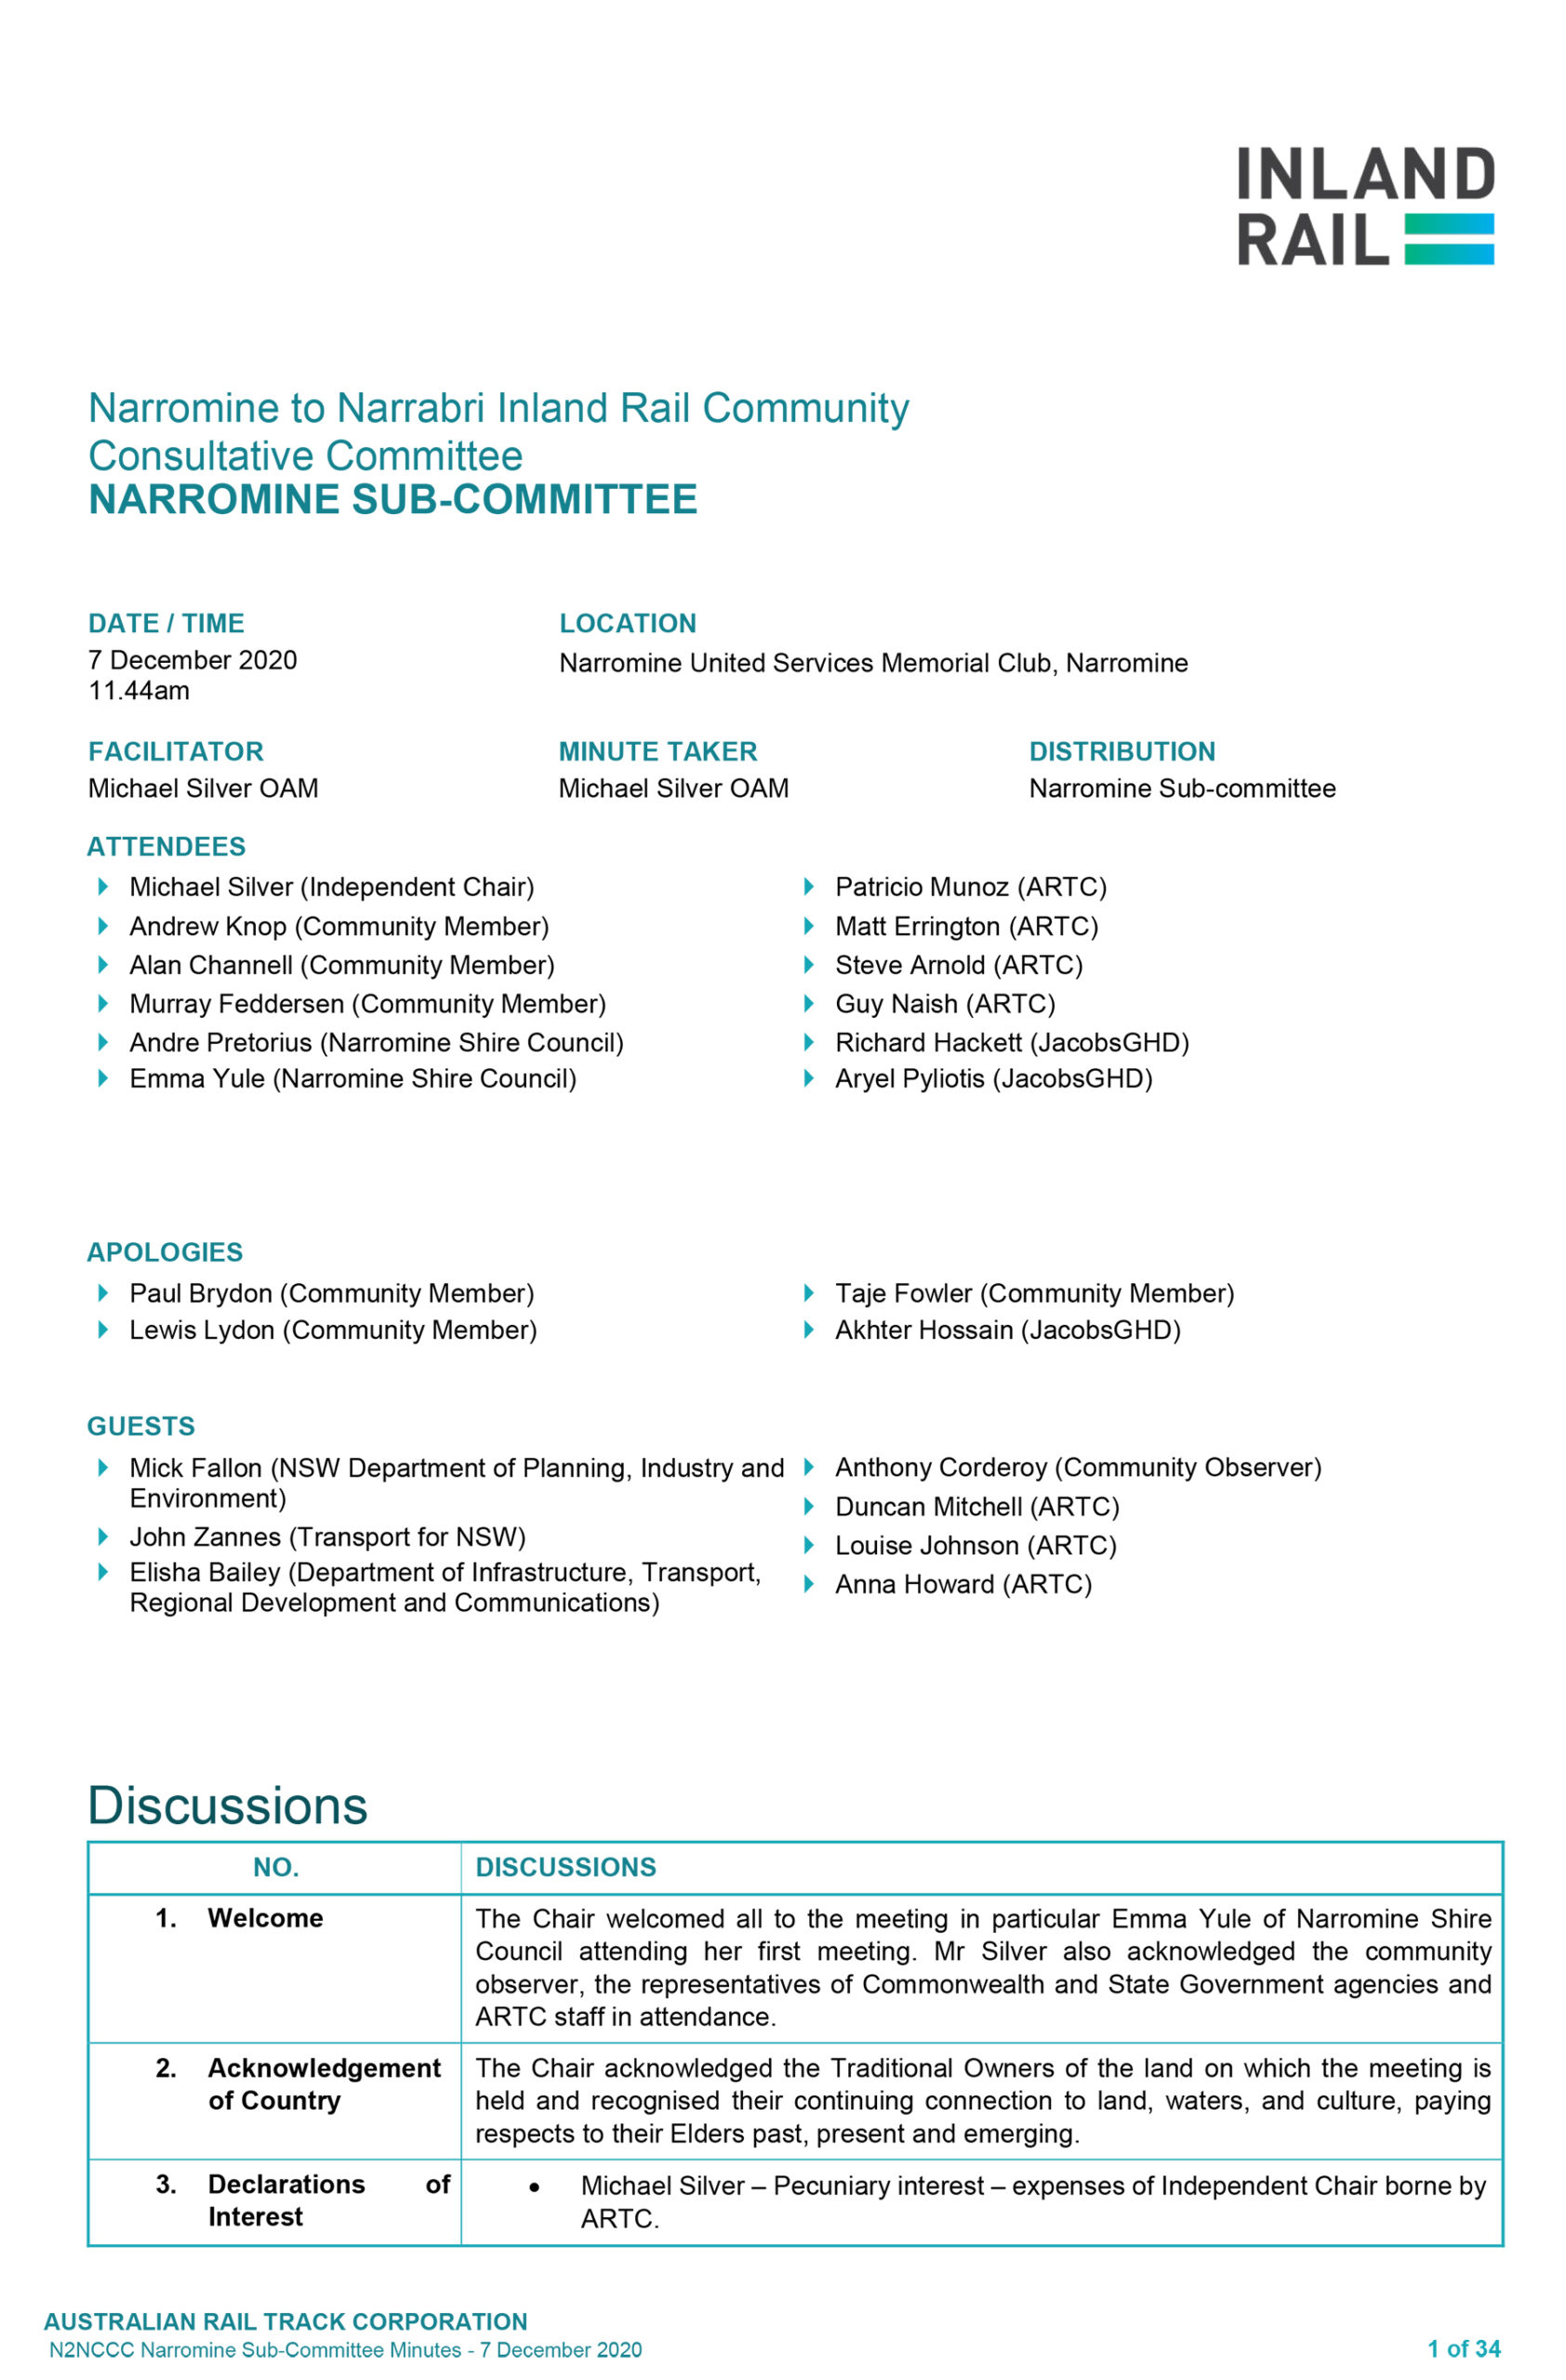 Narromine Sub-Committee Meeting Minutes 7 December 2020